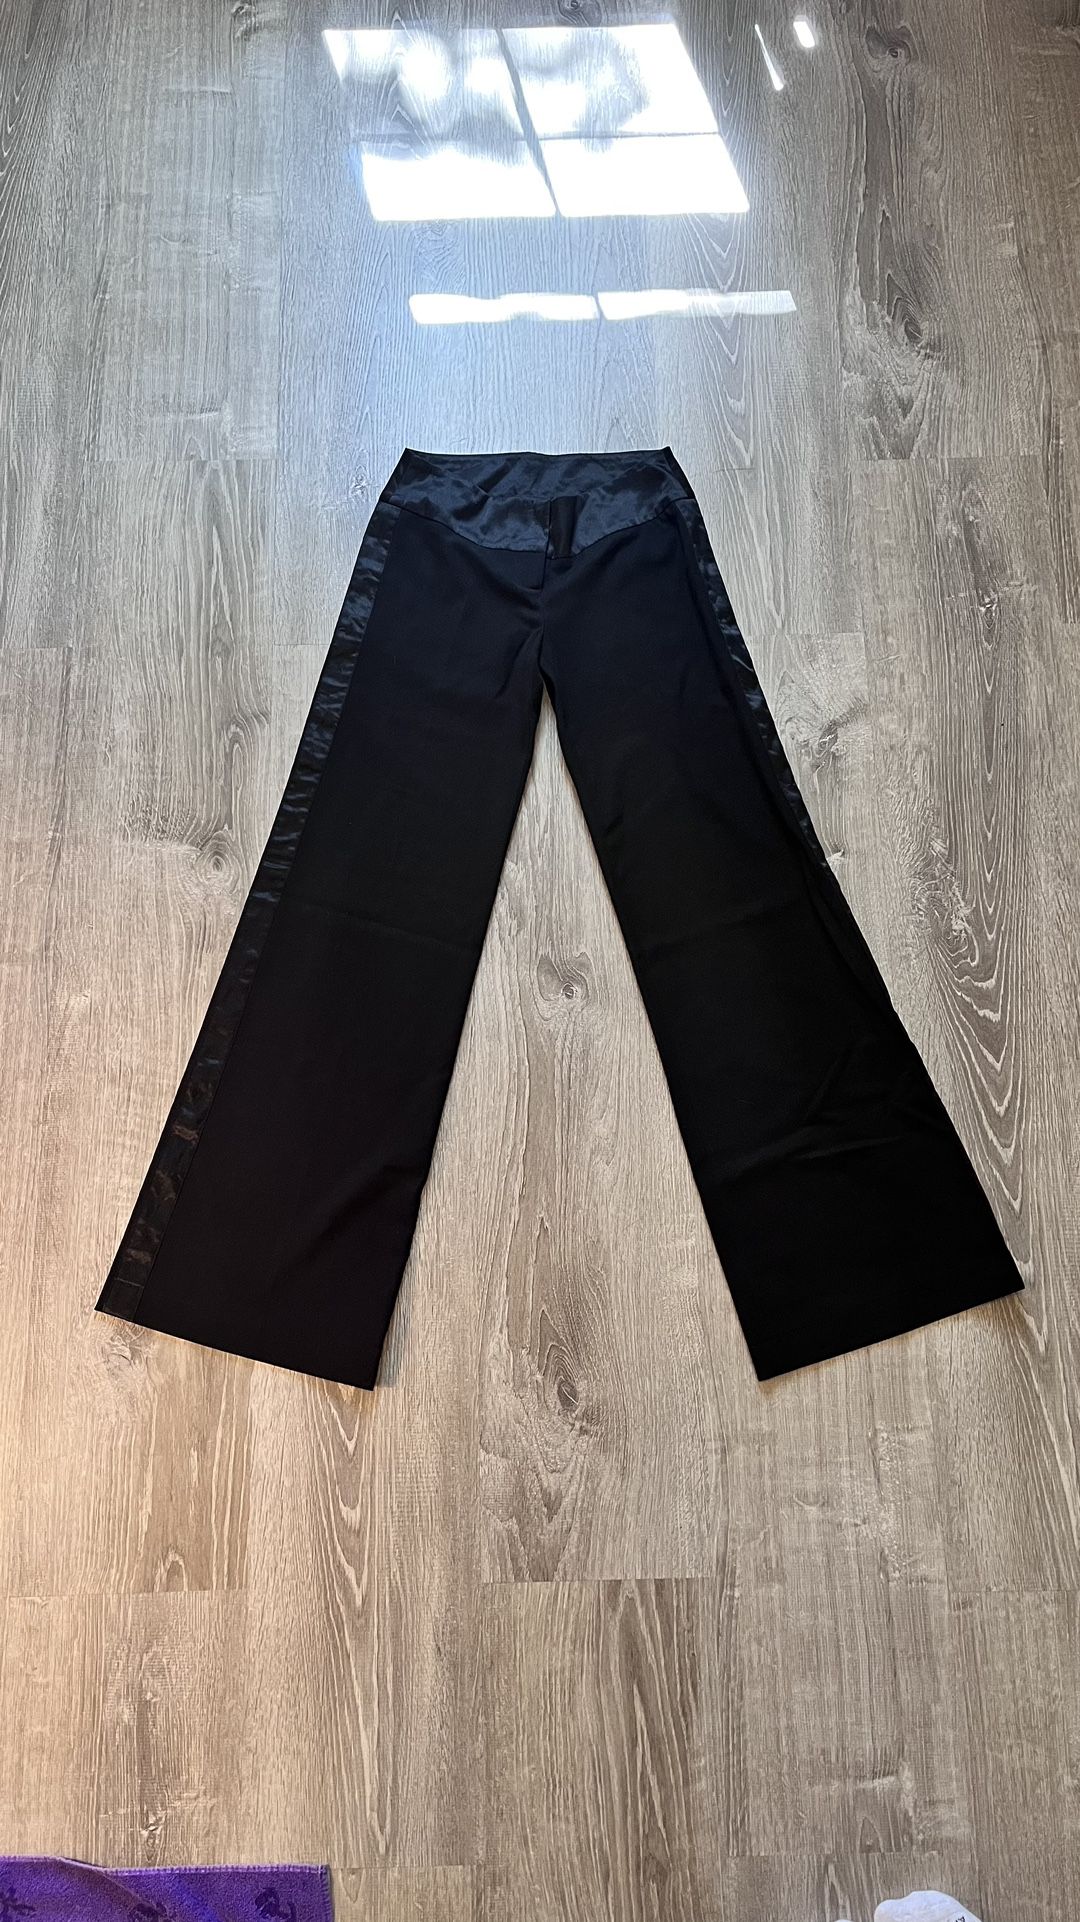 H&M Size 4 Black Wide Leg Slack Dress Pants Silk Business Casual in